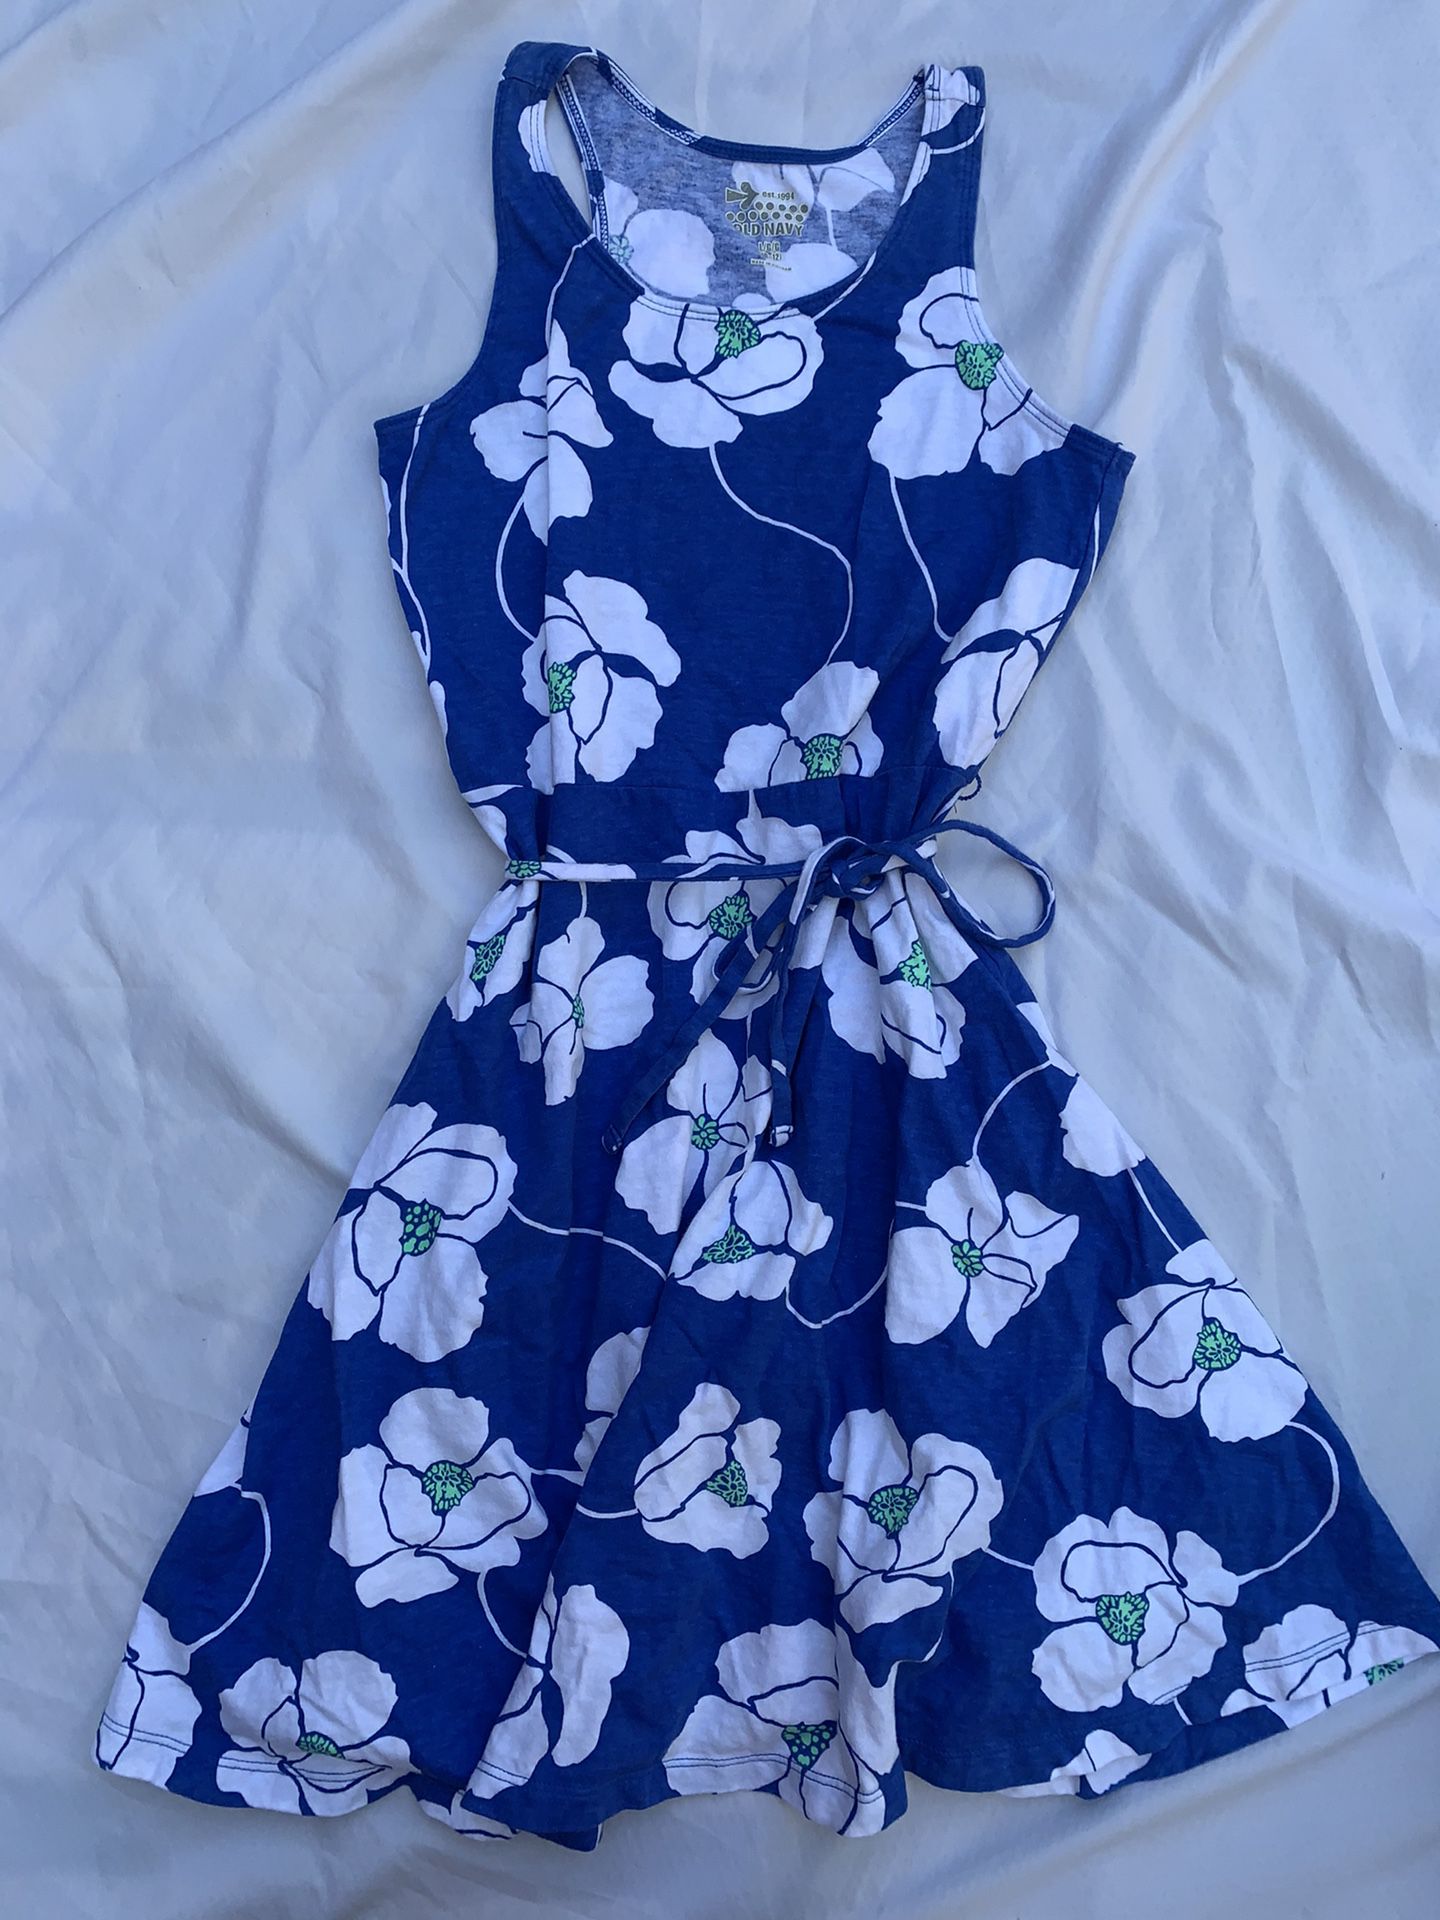 Girls size 10/12 large OldNavy dress blue floral summer sleeveless